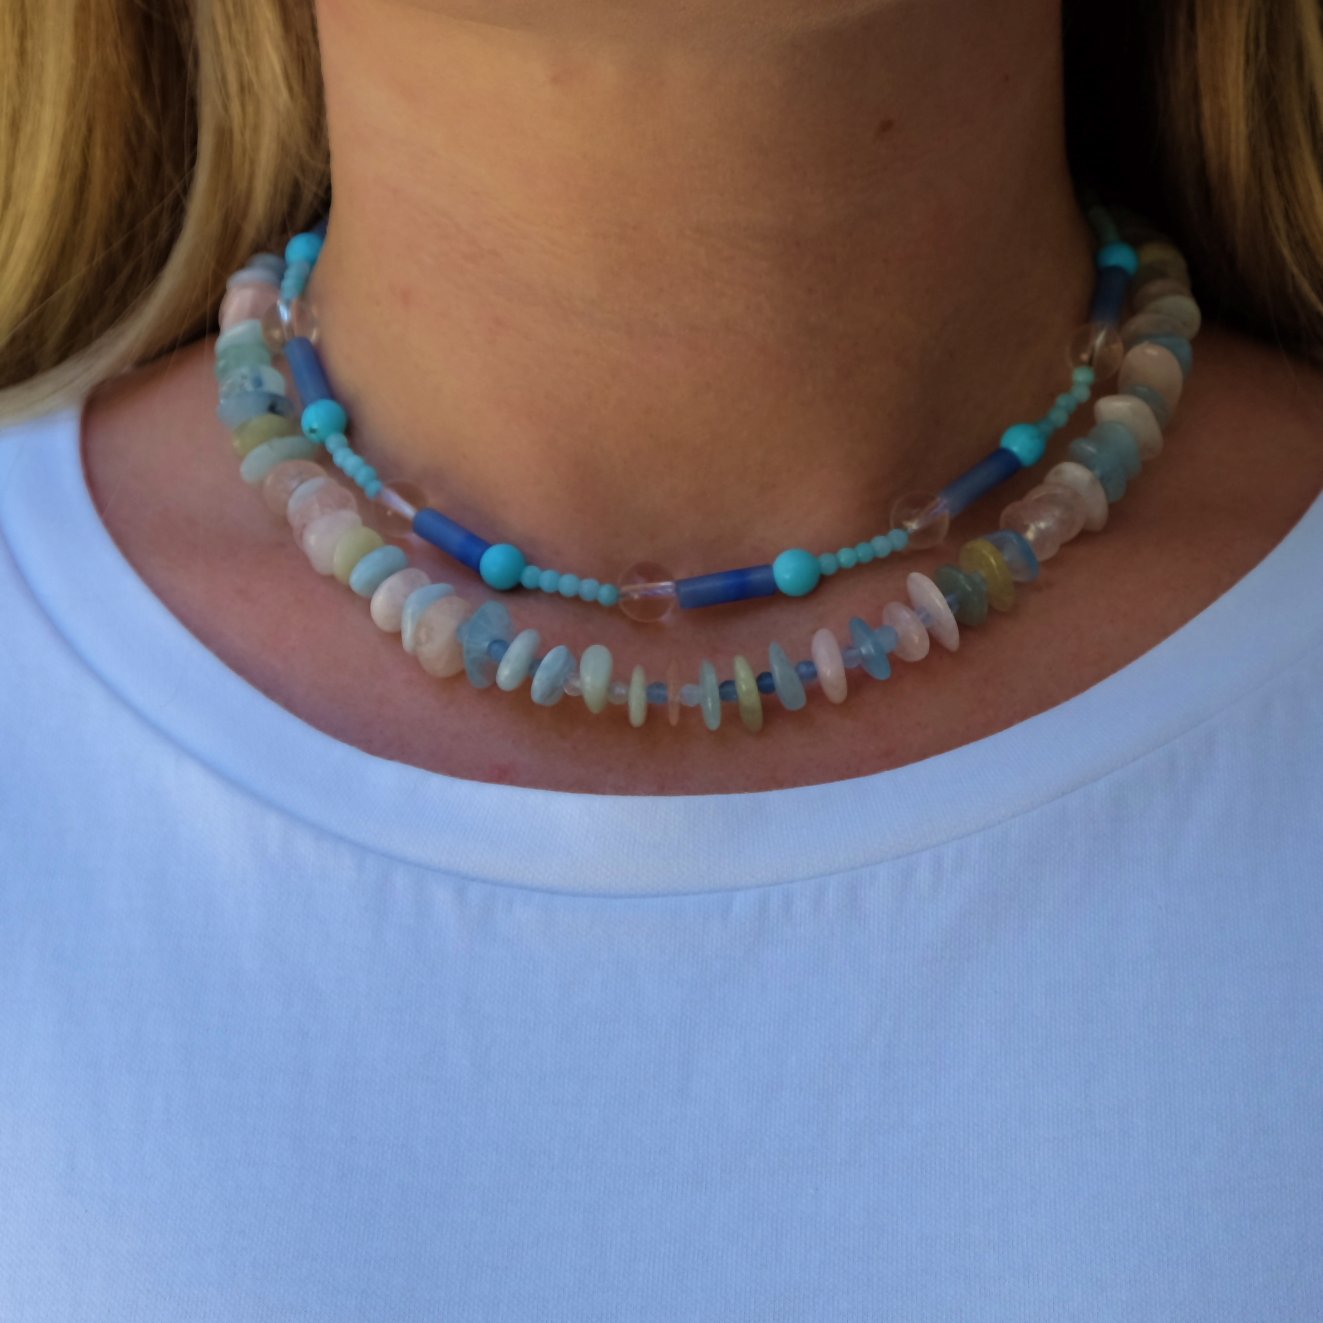 DUO Necklace with Aquamarine, Amazonite and Turquoise